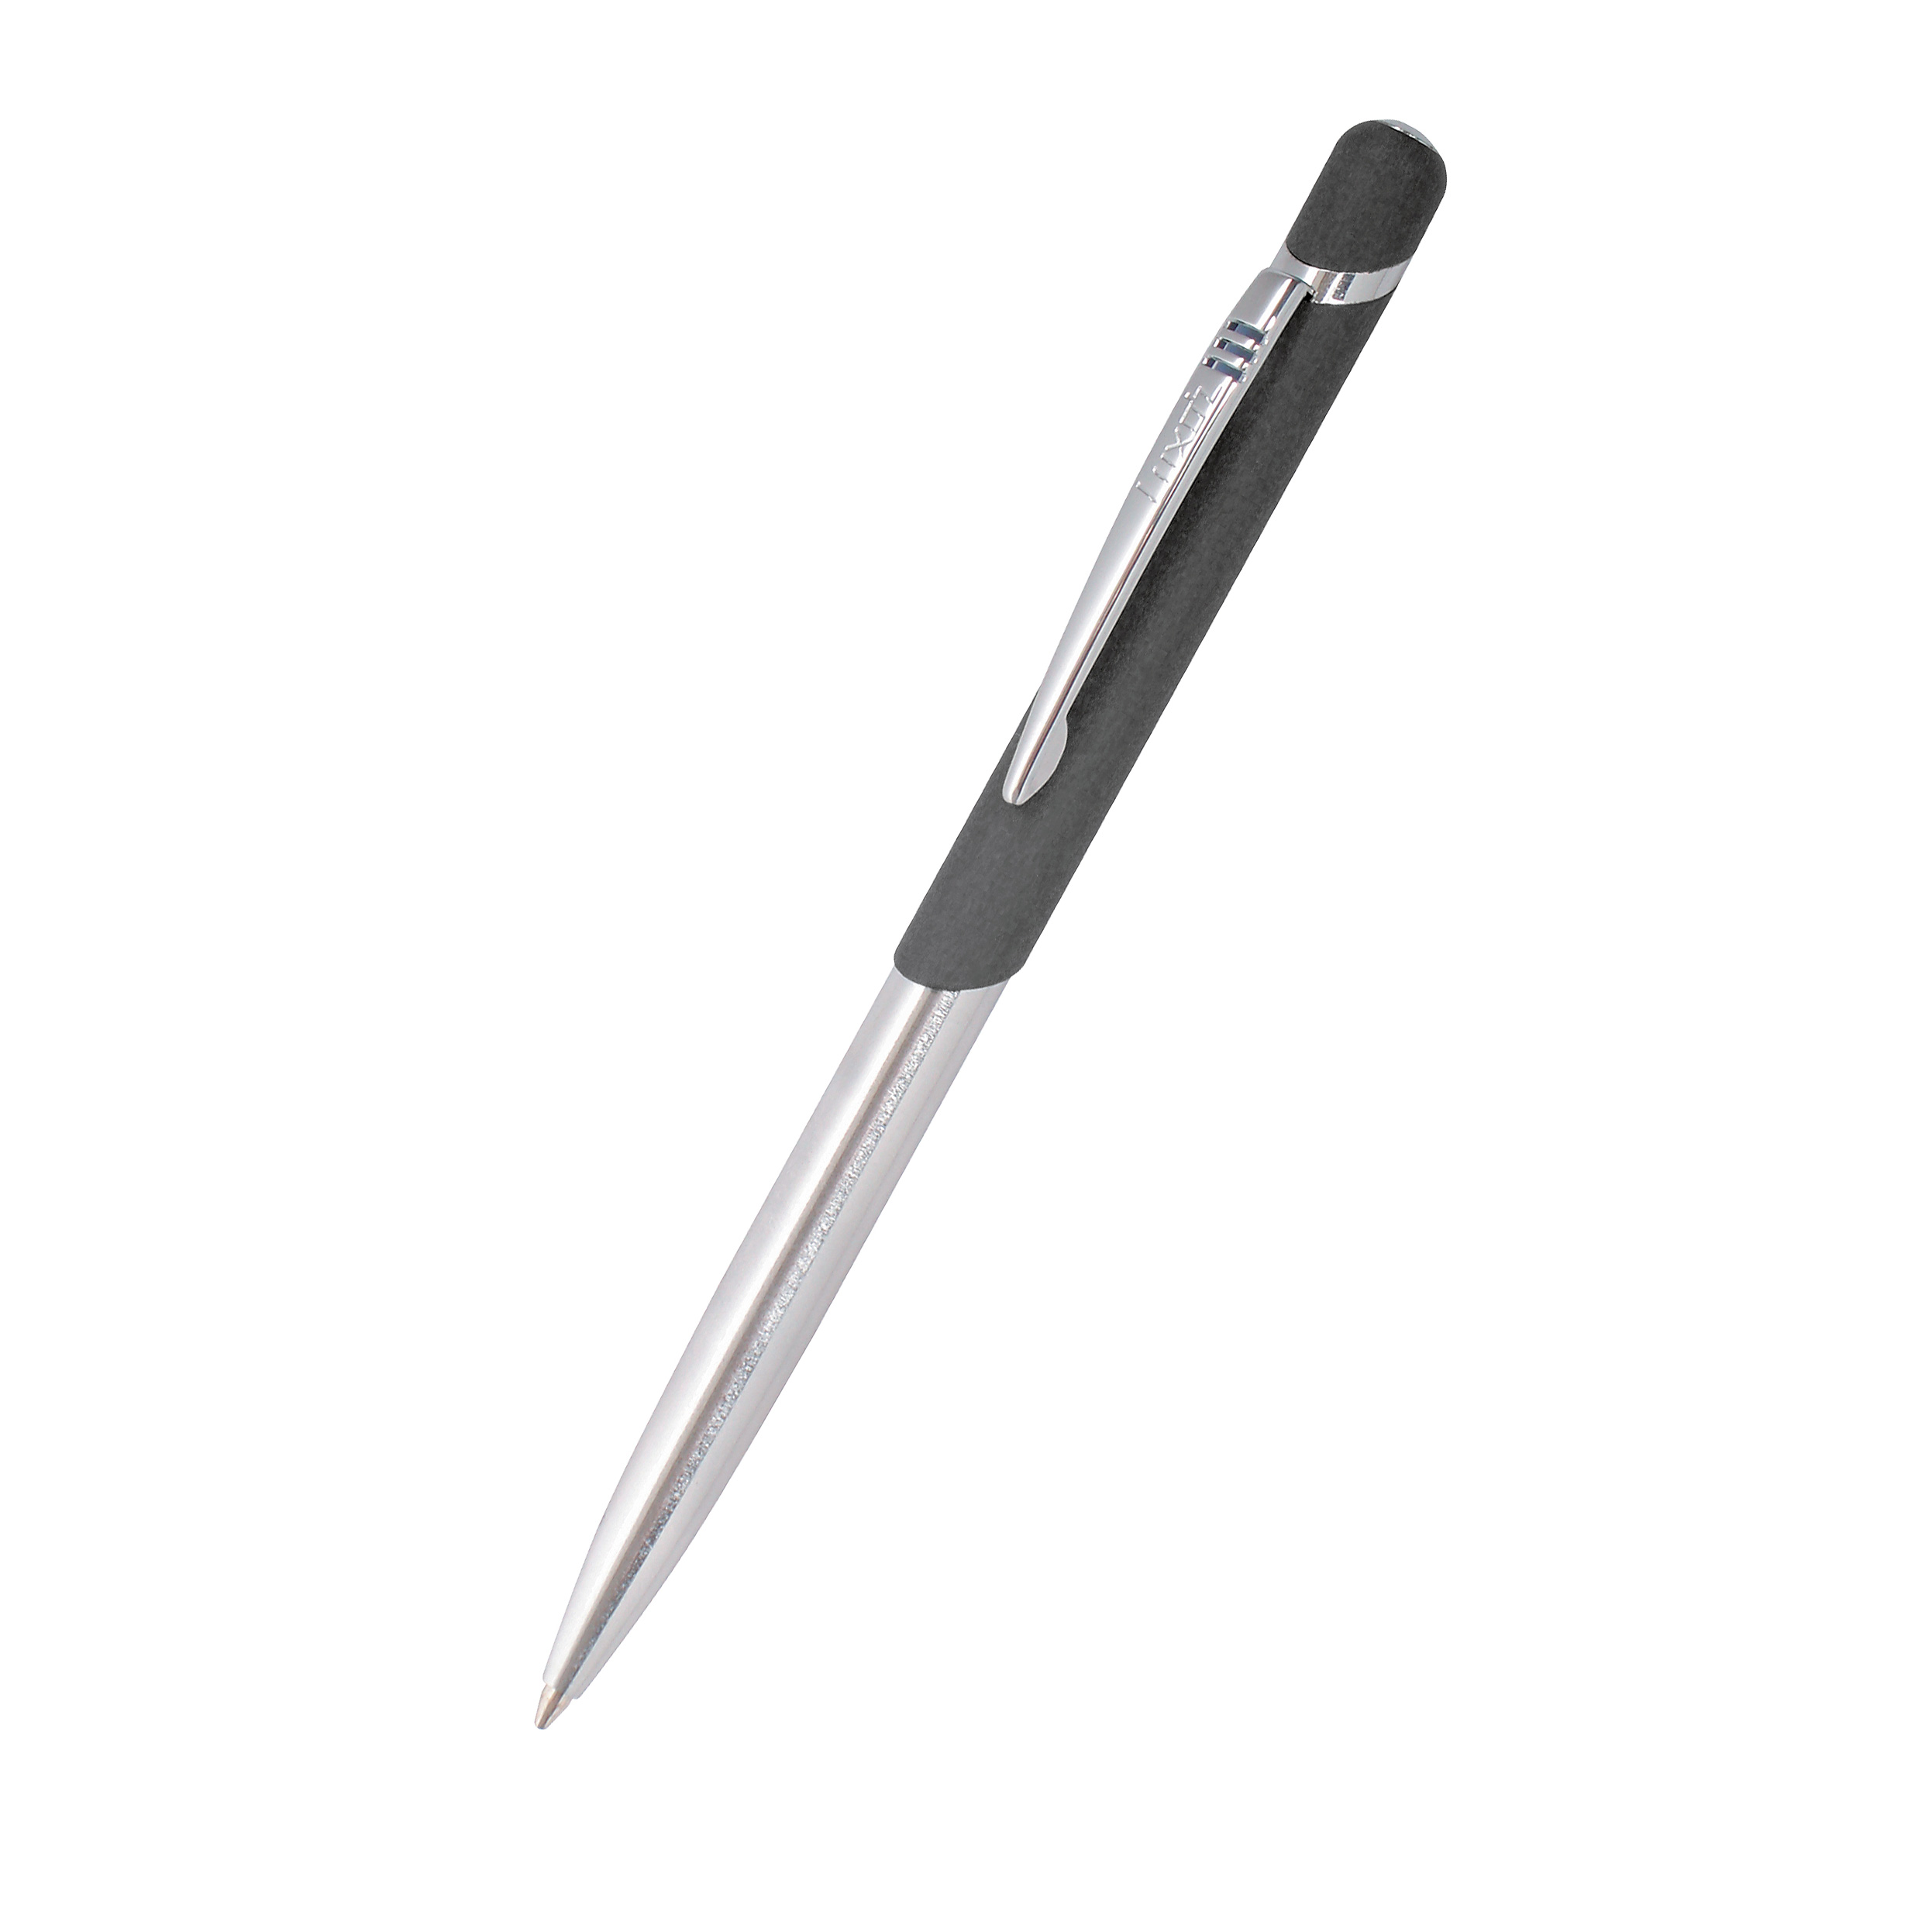 Kuličkové pero Luxor Gemini, černo-stříbrné